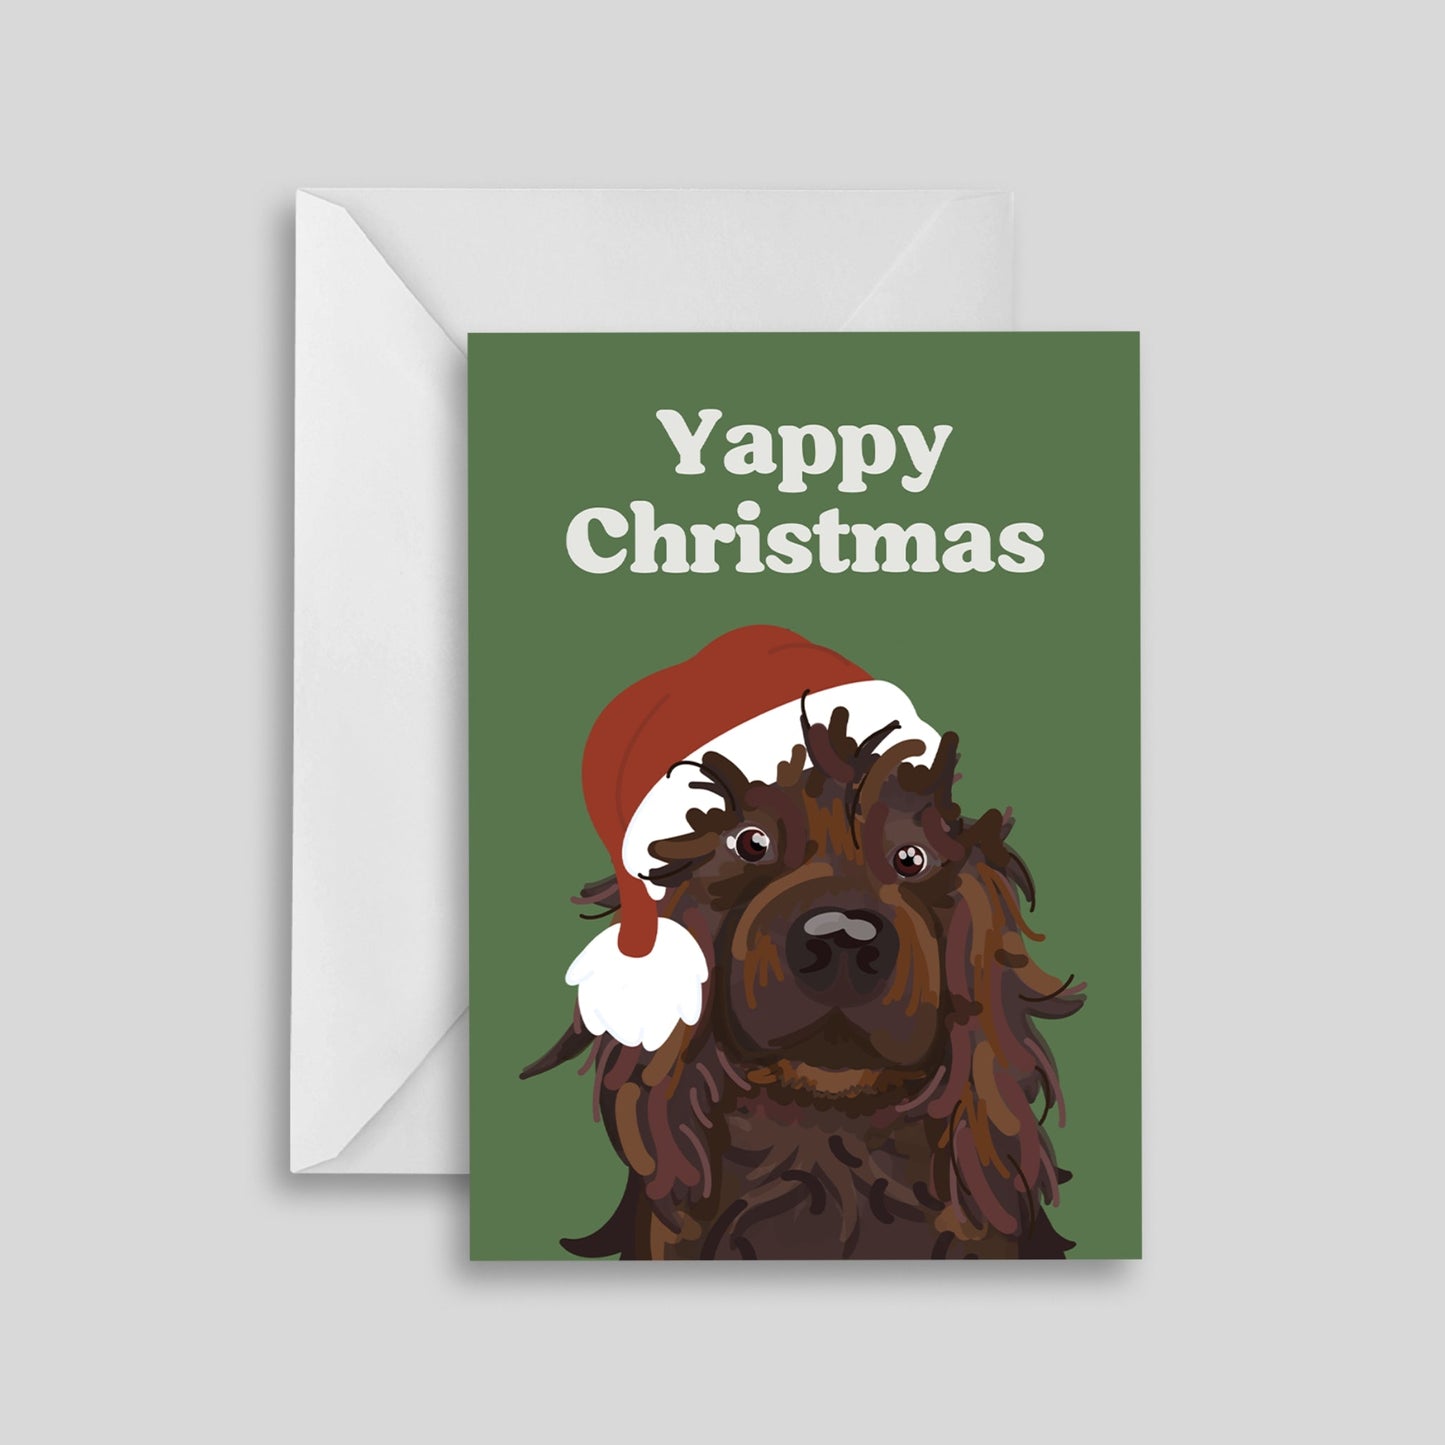 Wren & Rye Dog Christmas Card - Yappy Christmas (Santa Paws) Green